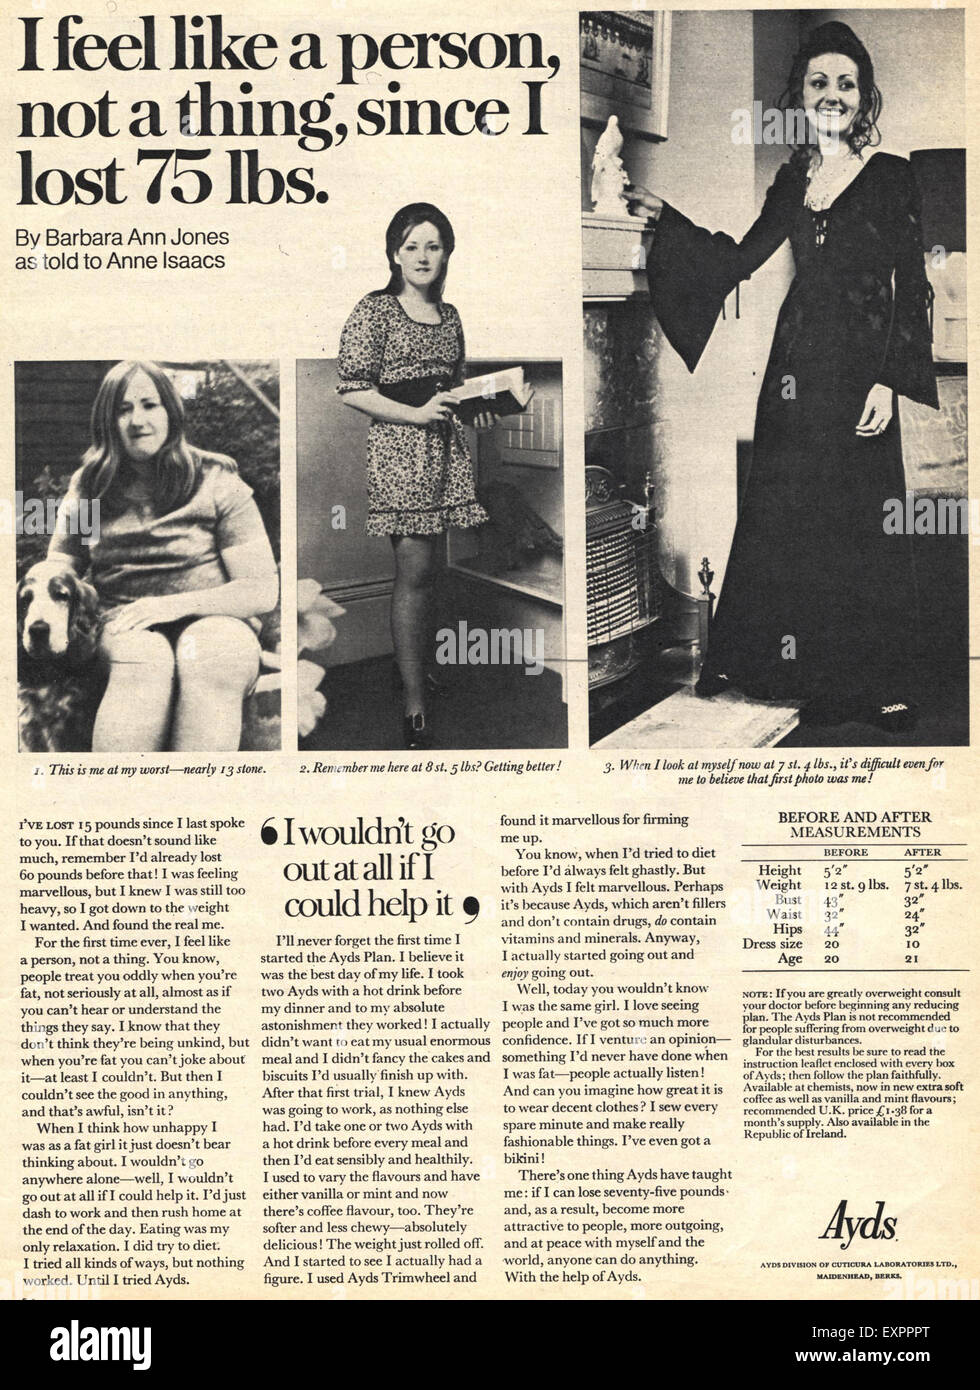 1970er Jahre UK Ayds Magazin Anzeige Stockfoto